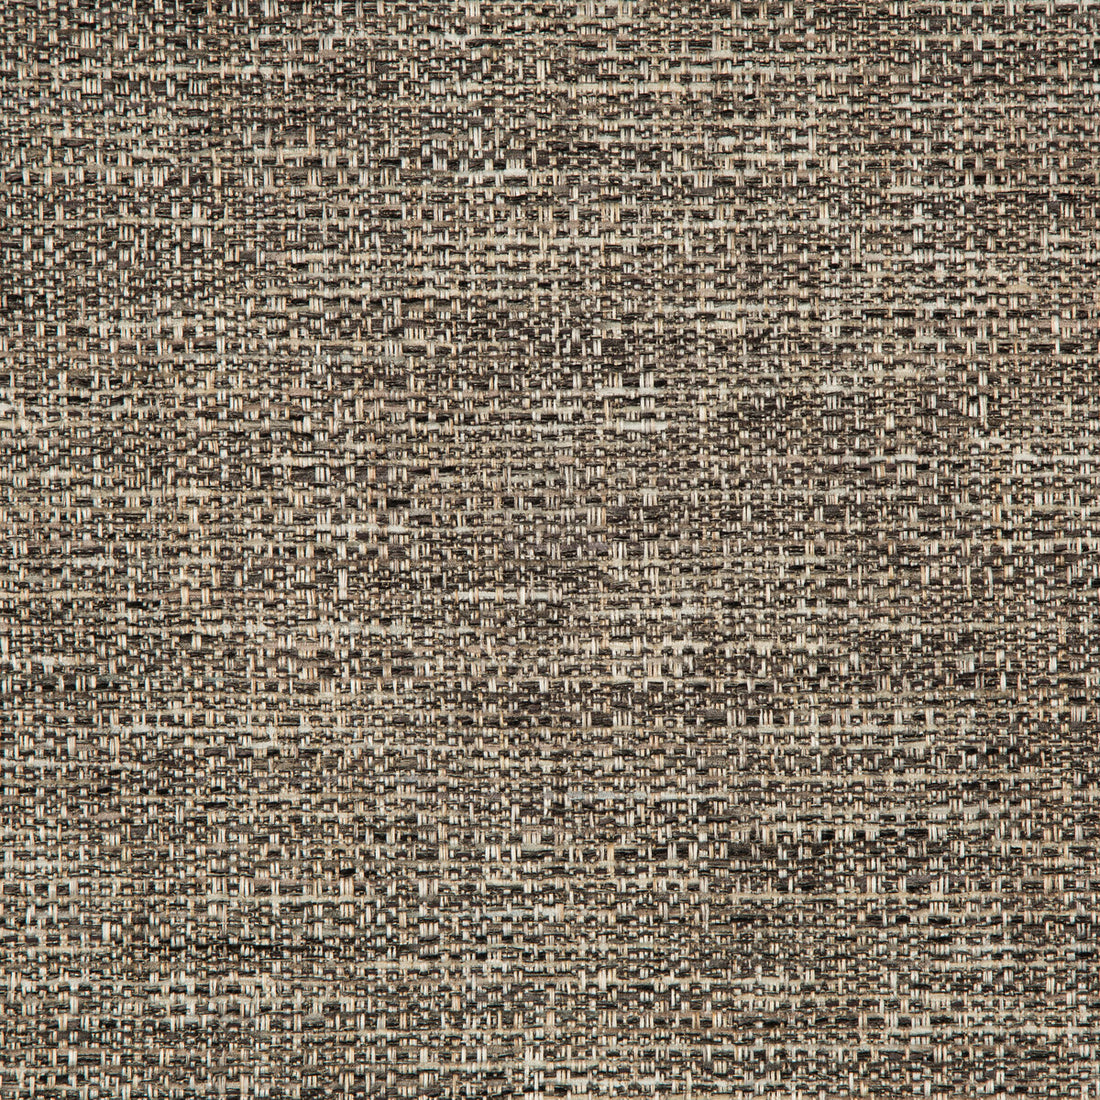 Kravet Smart fabric in 35929-21 color - pattern 35929.21.0 - by Kravet Smart in the Performance Kravetarmor collection